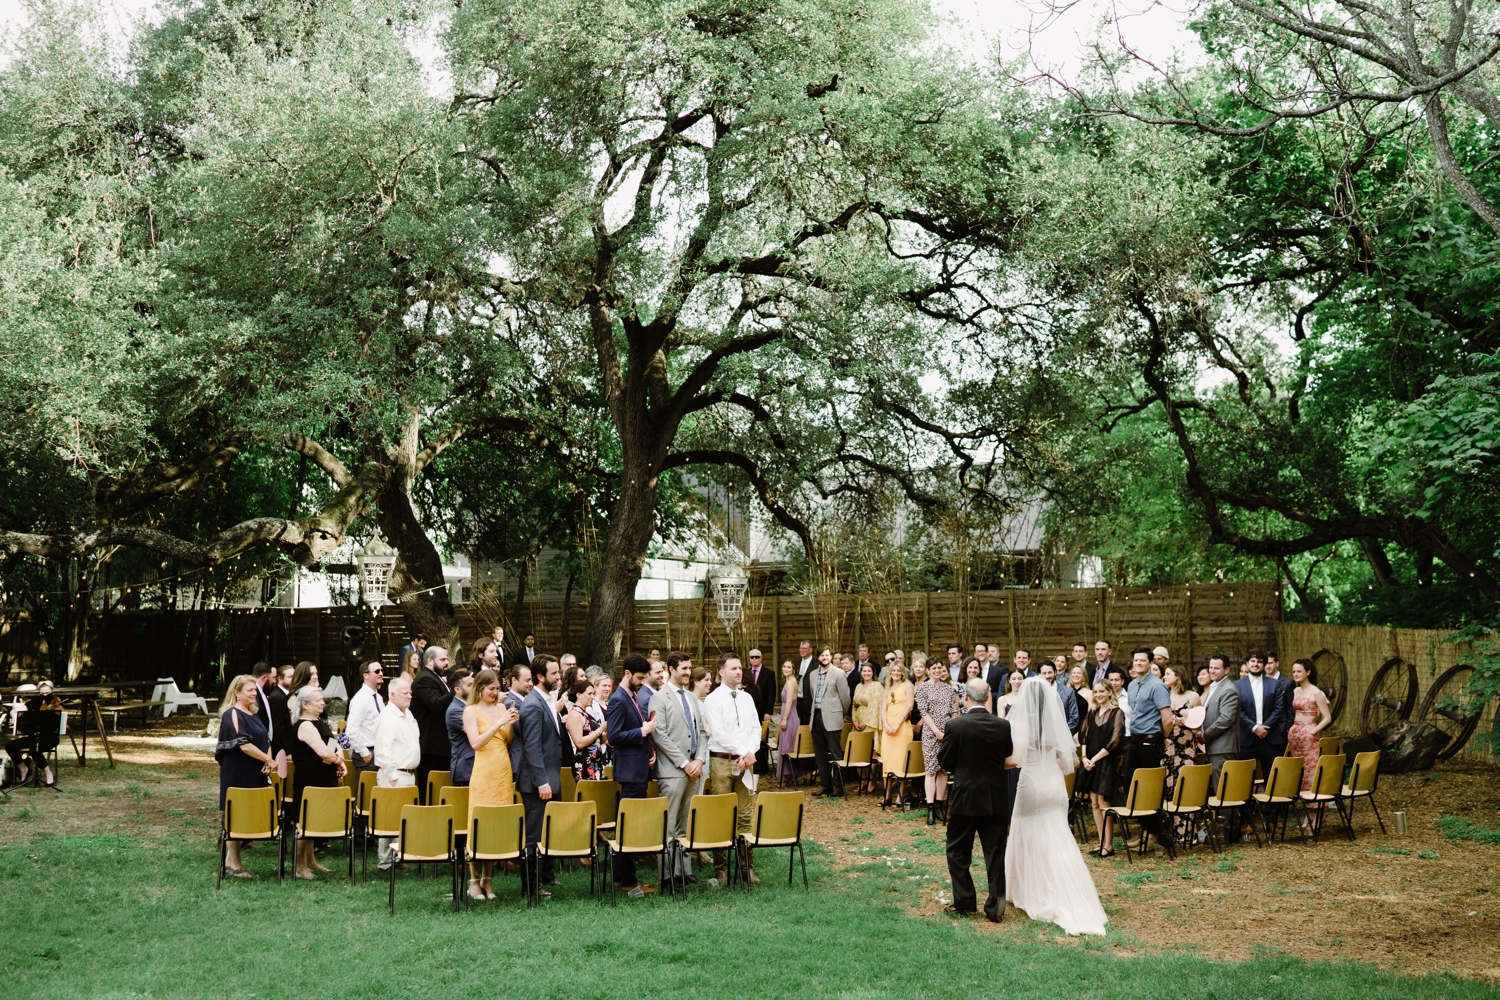 Downtown Austin wedding ceremony outdoors under an Oak Tree